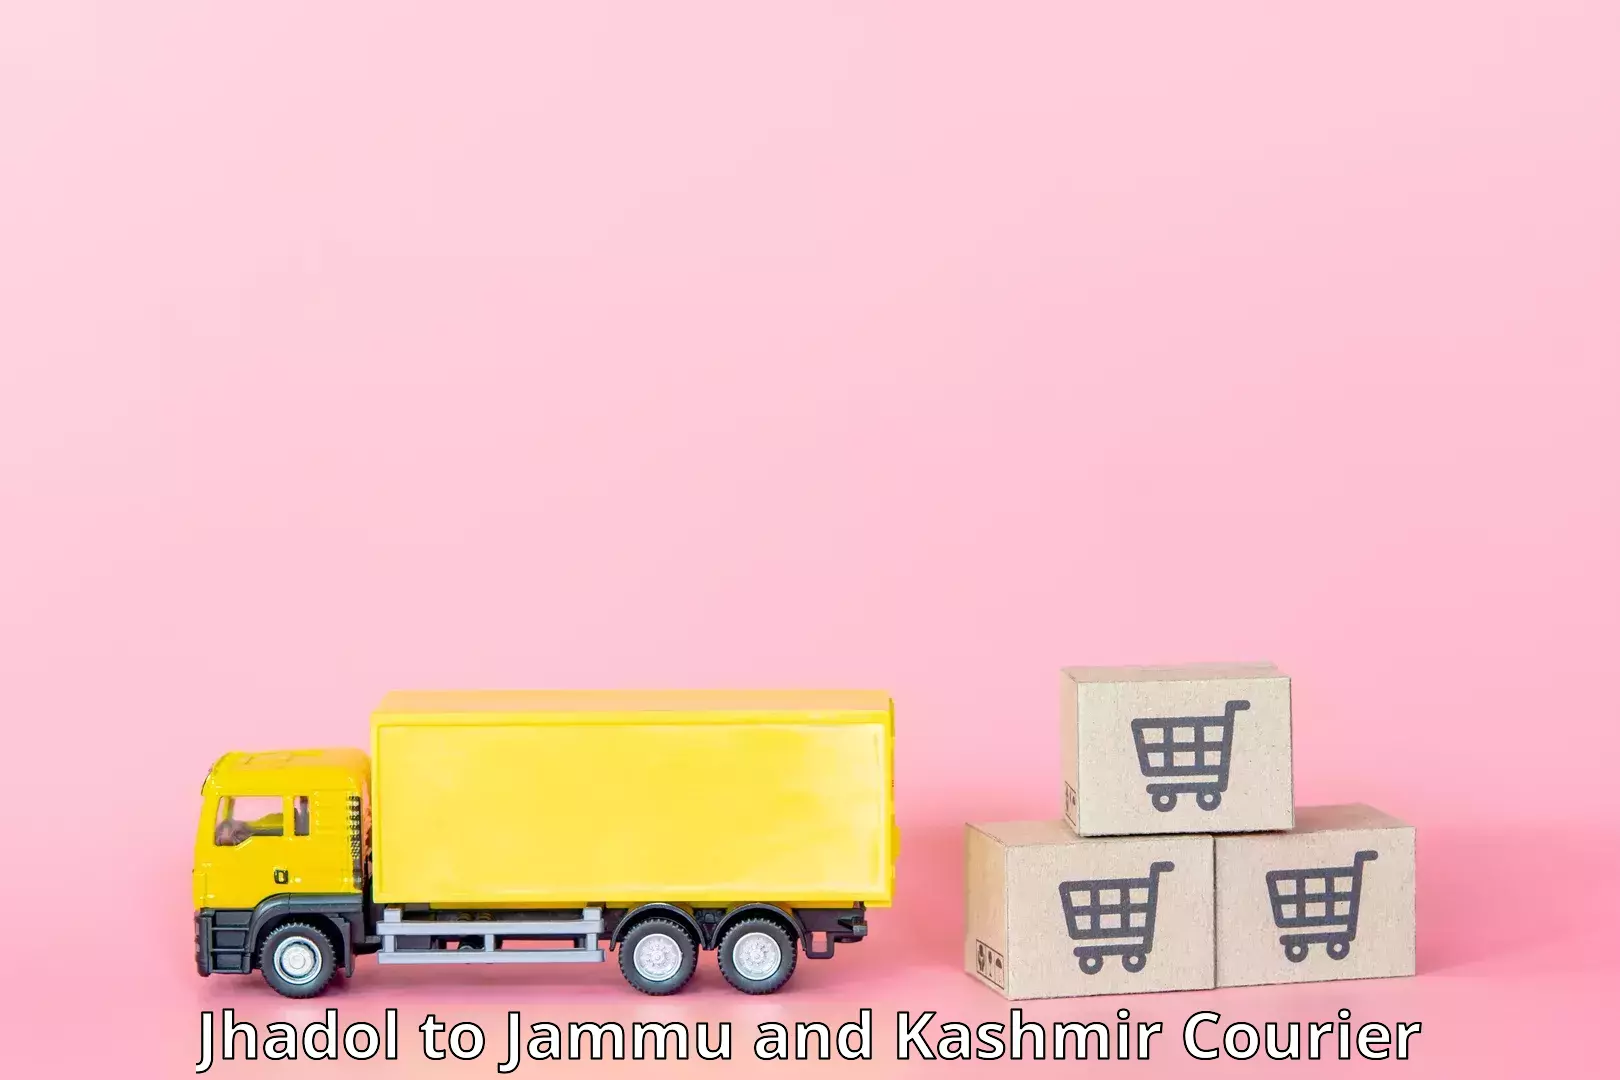 Flexible parcel services Jhadol to Jammu